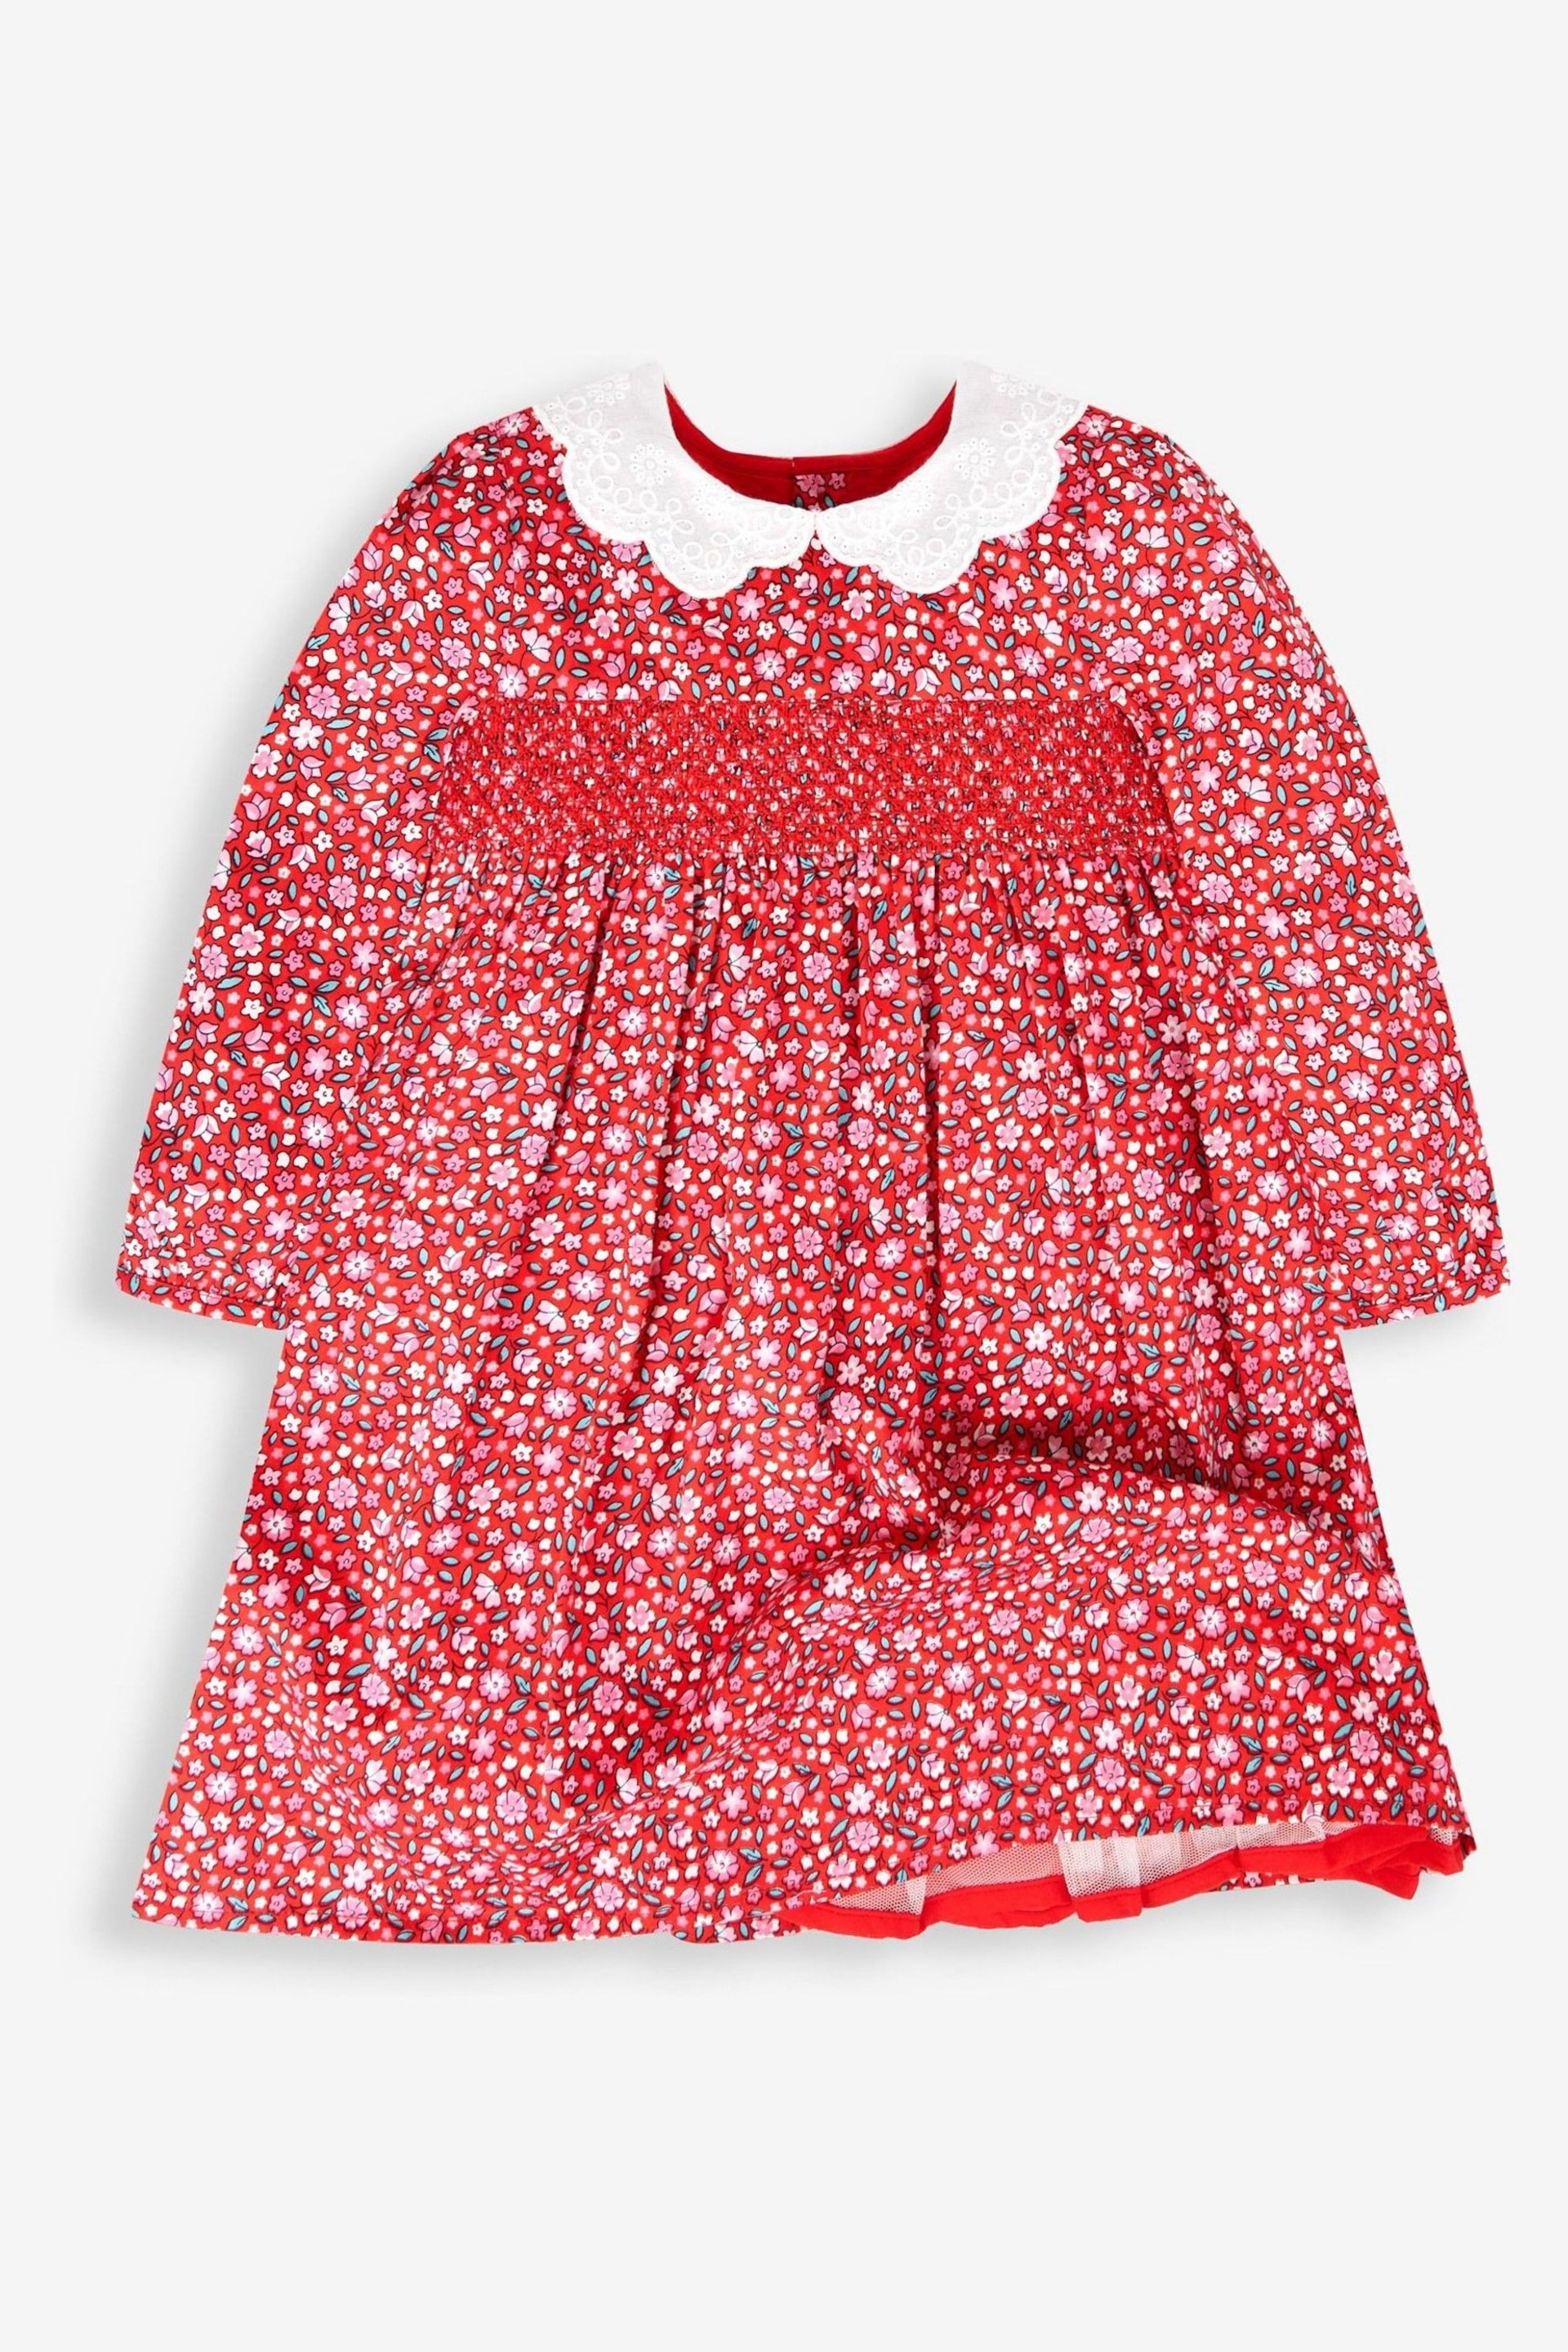 JoJo Maman Bébé Red Girls' Winter Blossom Smocked Party Dress - Image 3 of 6